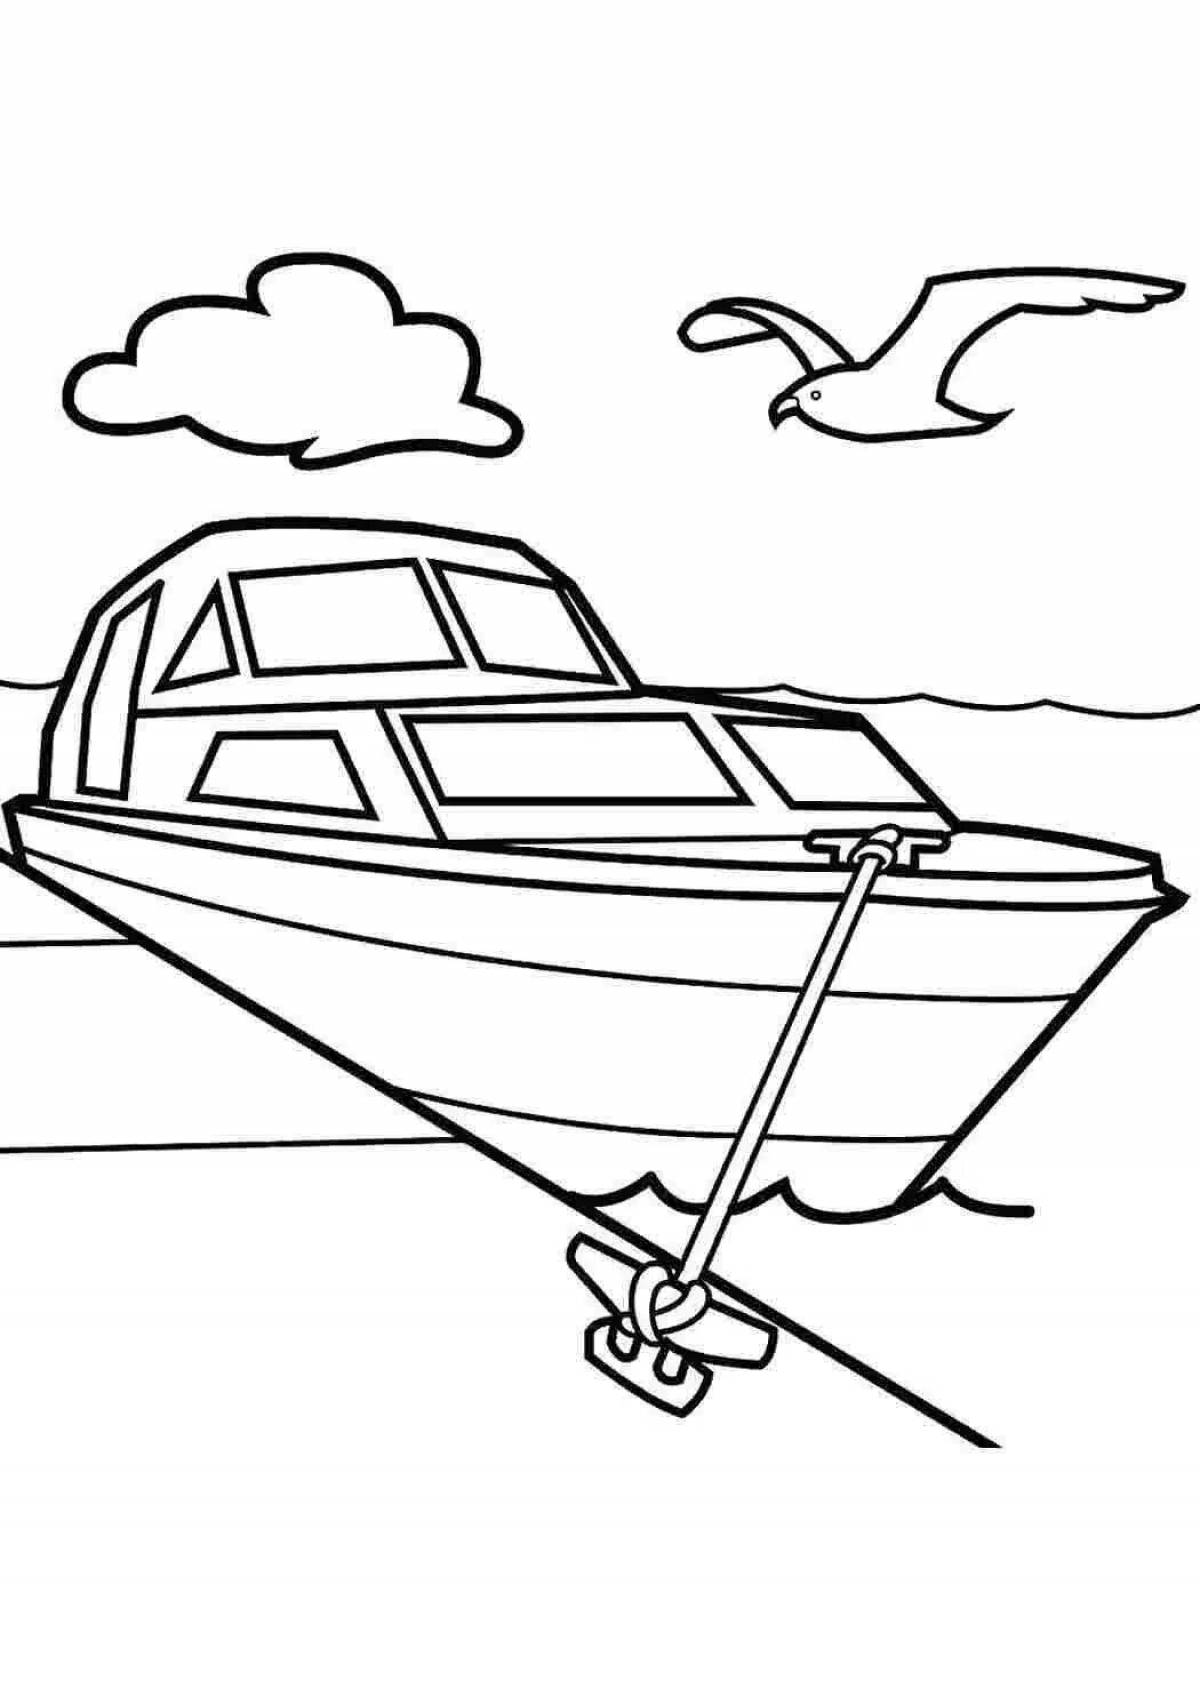 Coloring page joyful motorboat